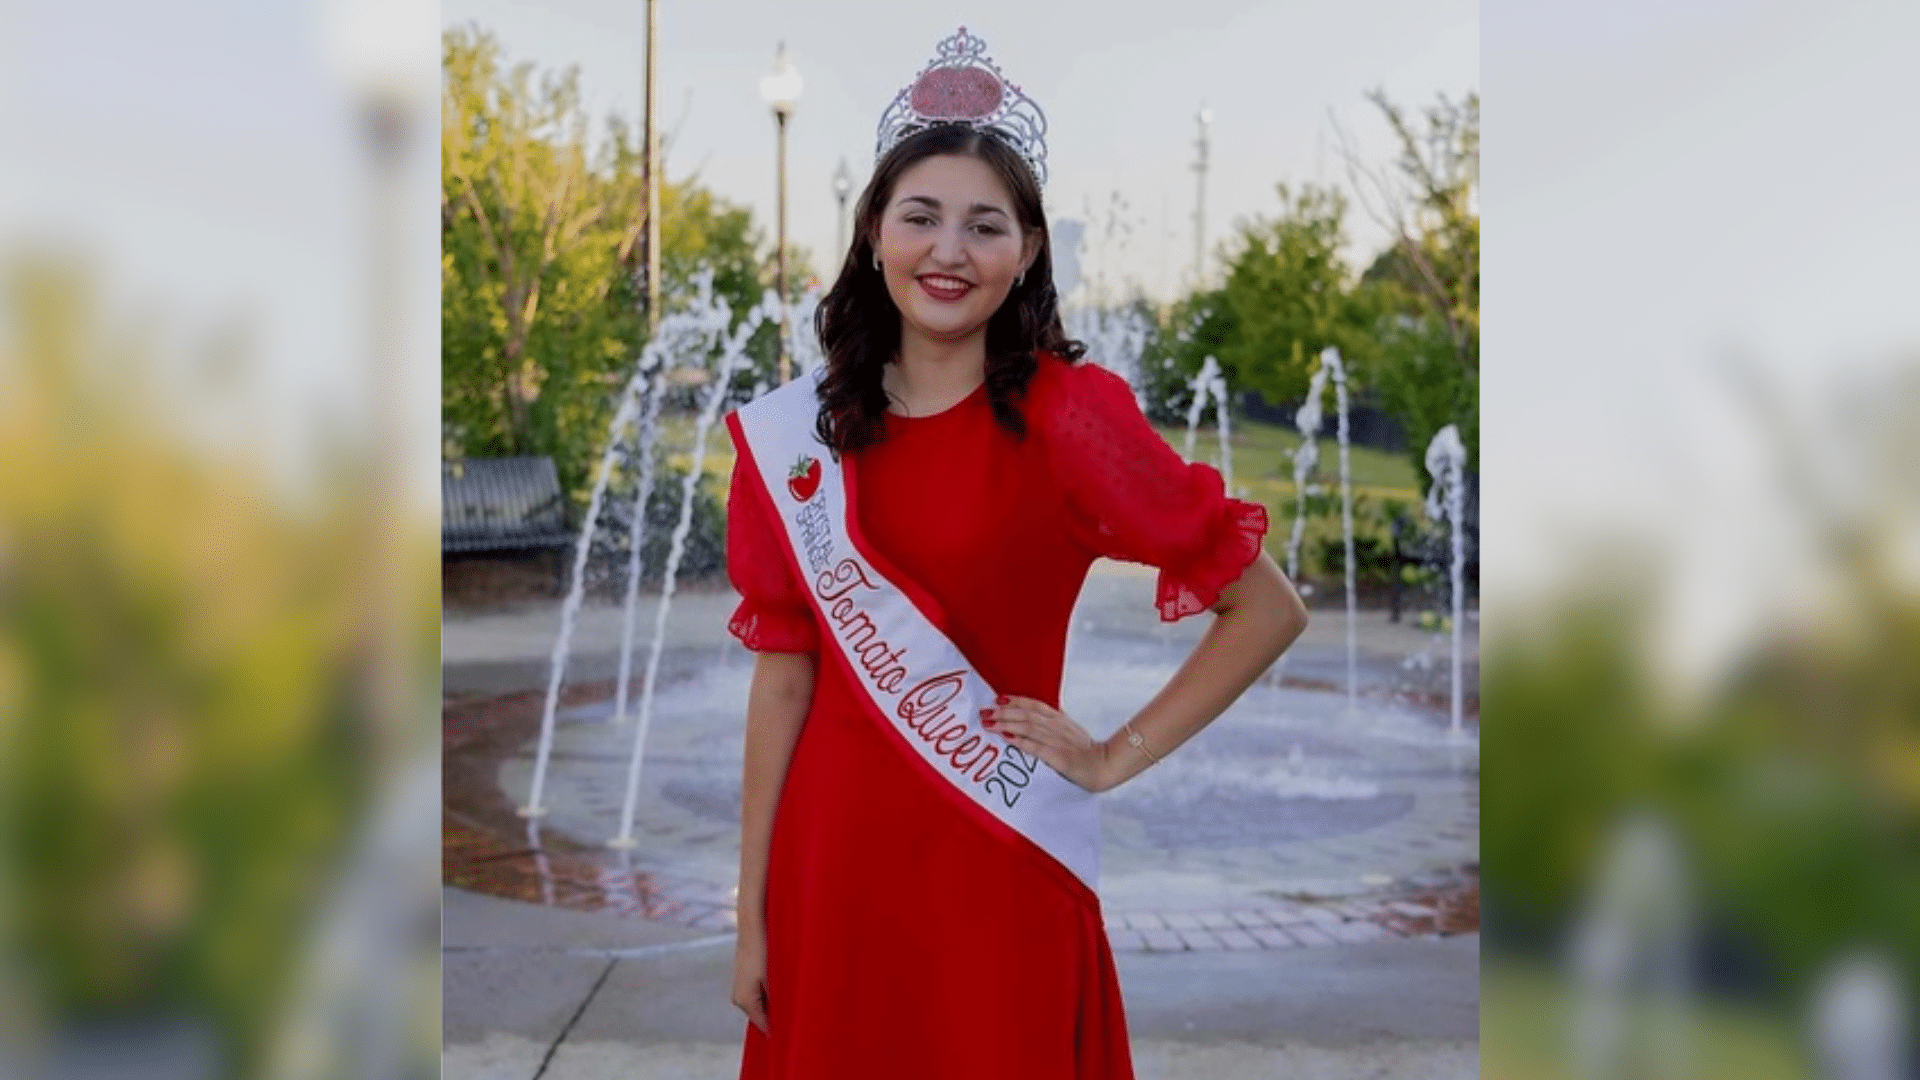 Lindsay Willett crowned 2023 Crystal Springs Tomato Queen SuperTalk